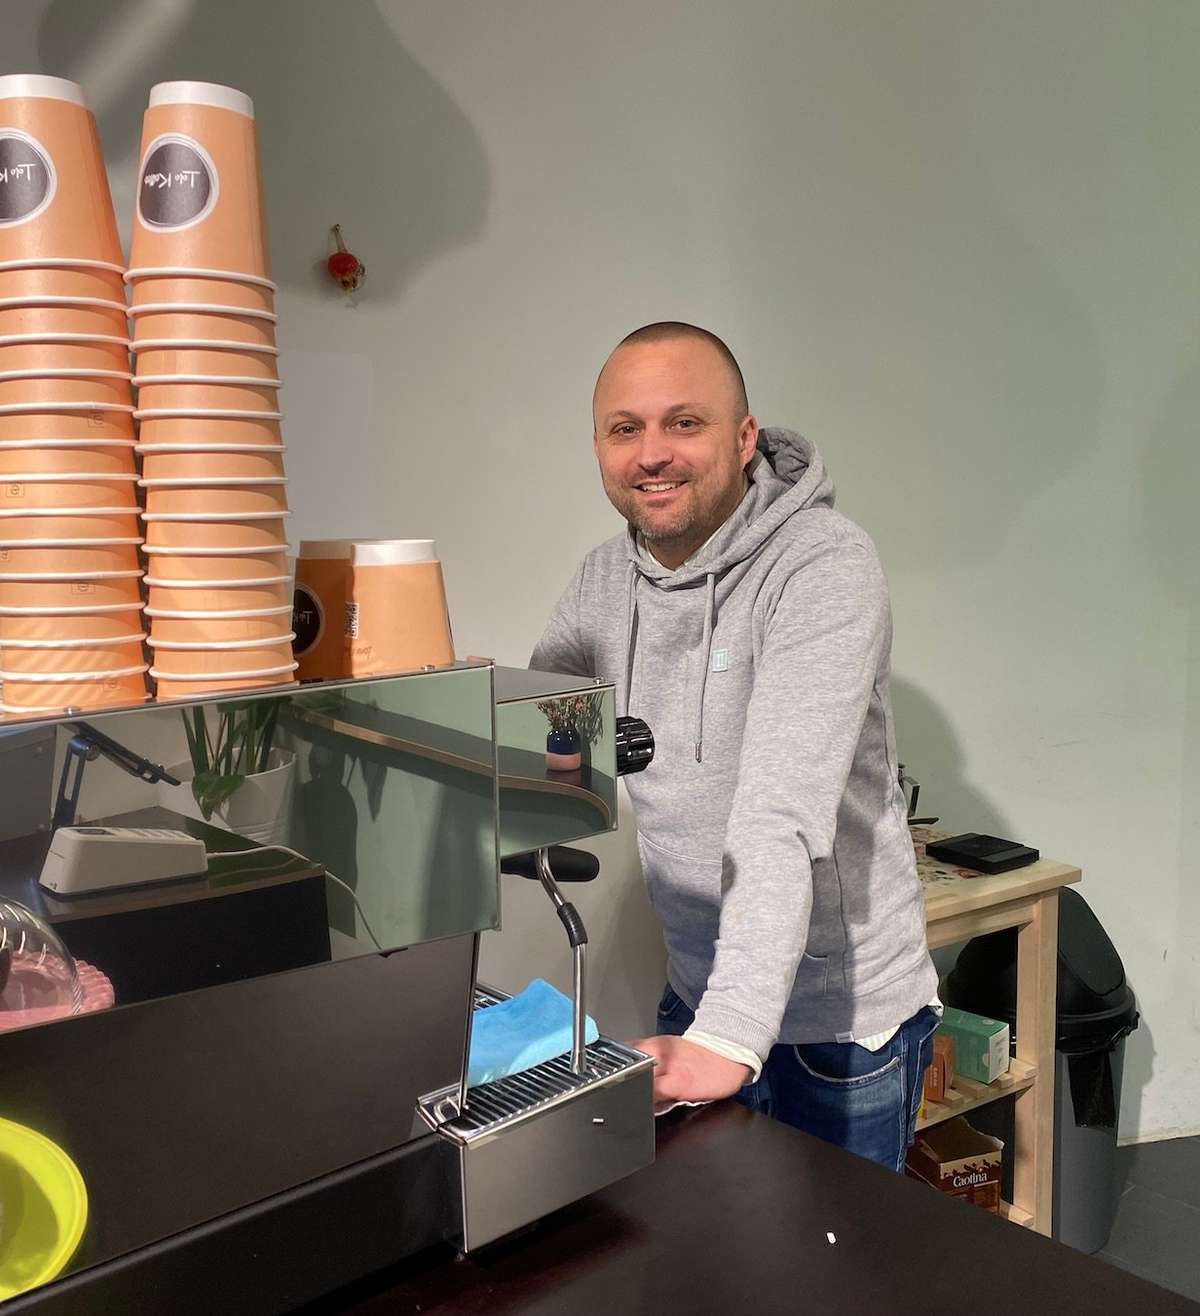 Lolo Kaffee: Zuger Kaffeeröster eröffnet winzigen Laden